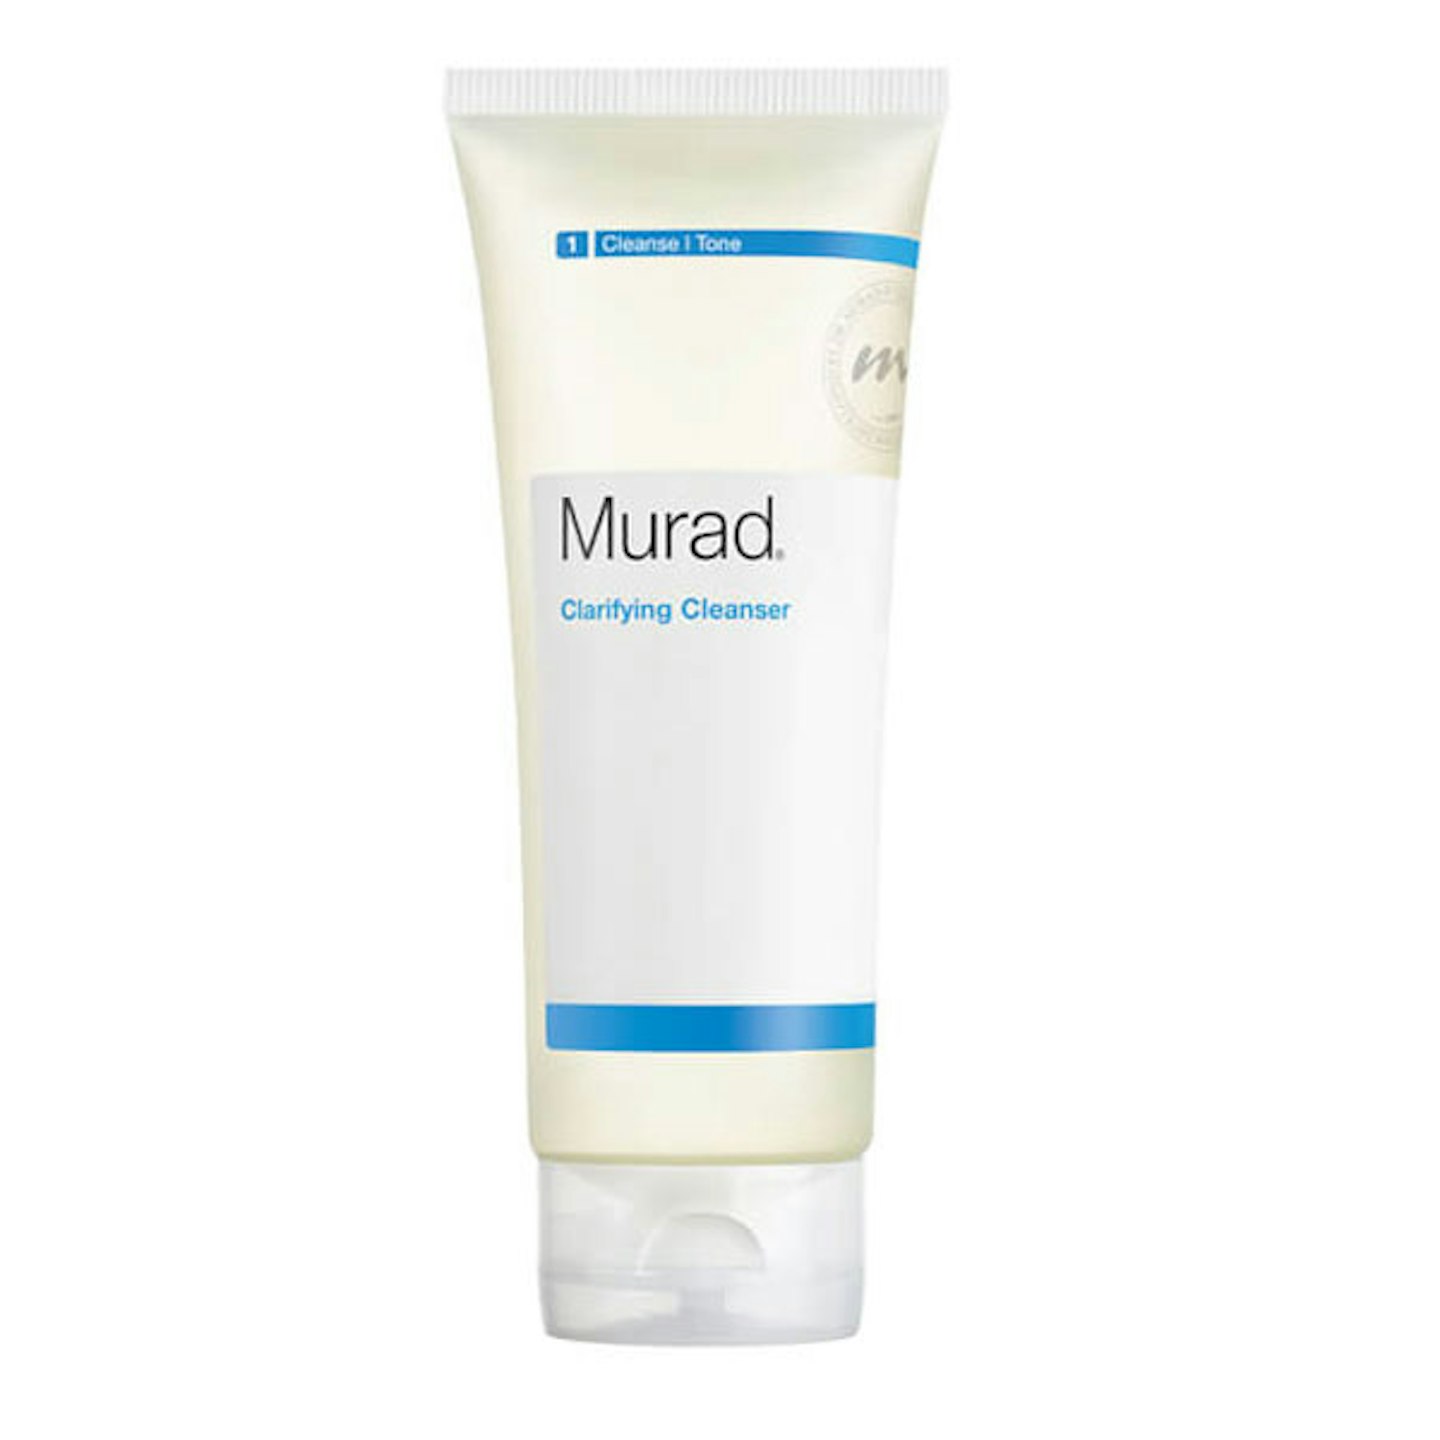 Murad Clarifying Cleanser, £19.50